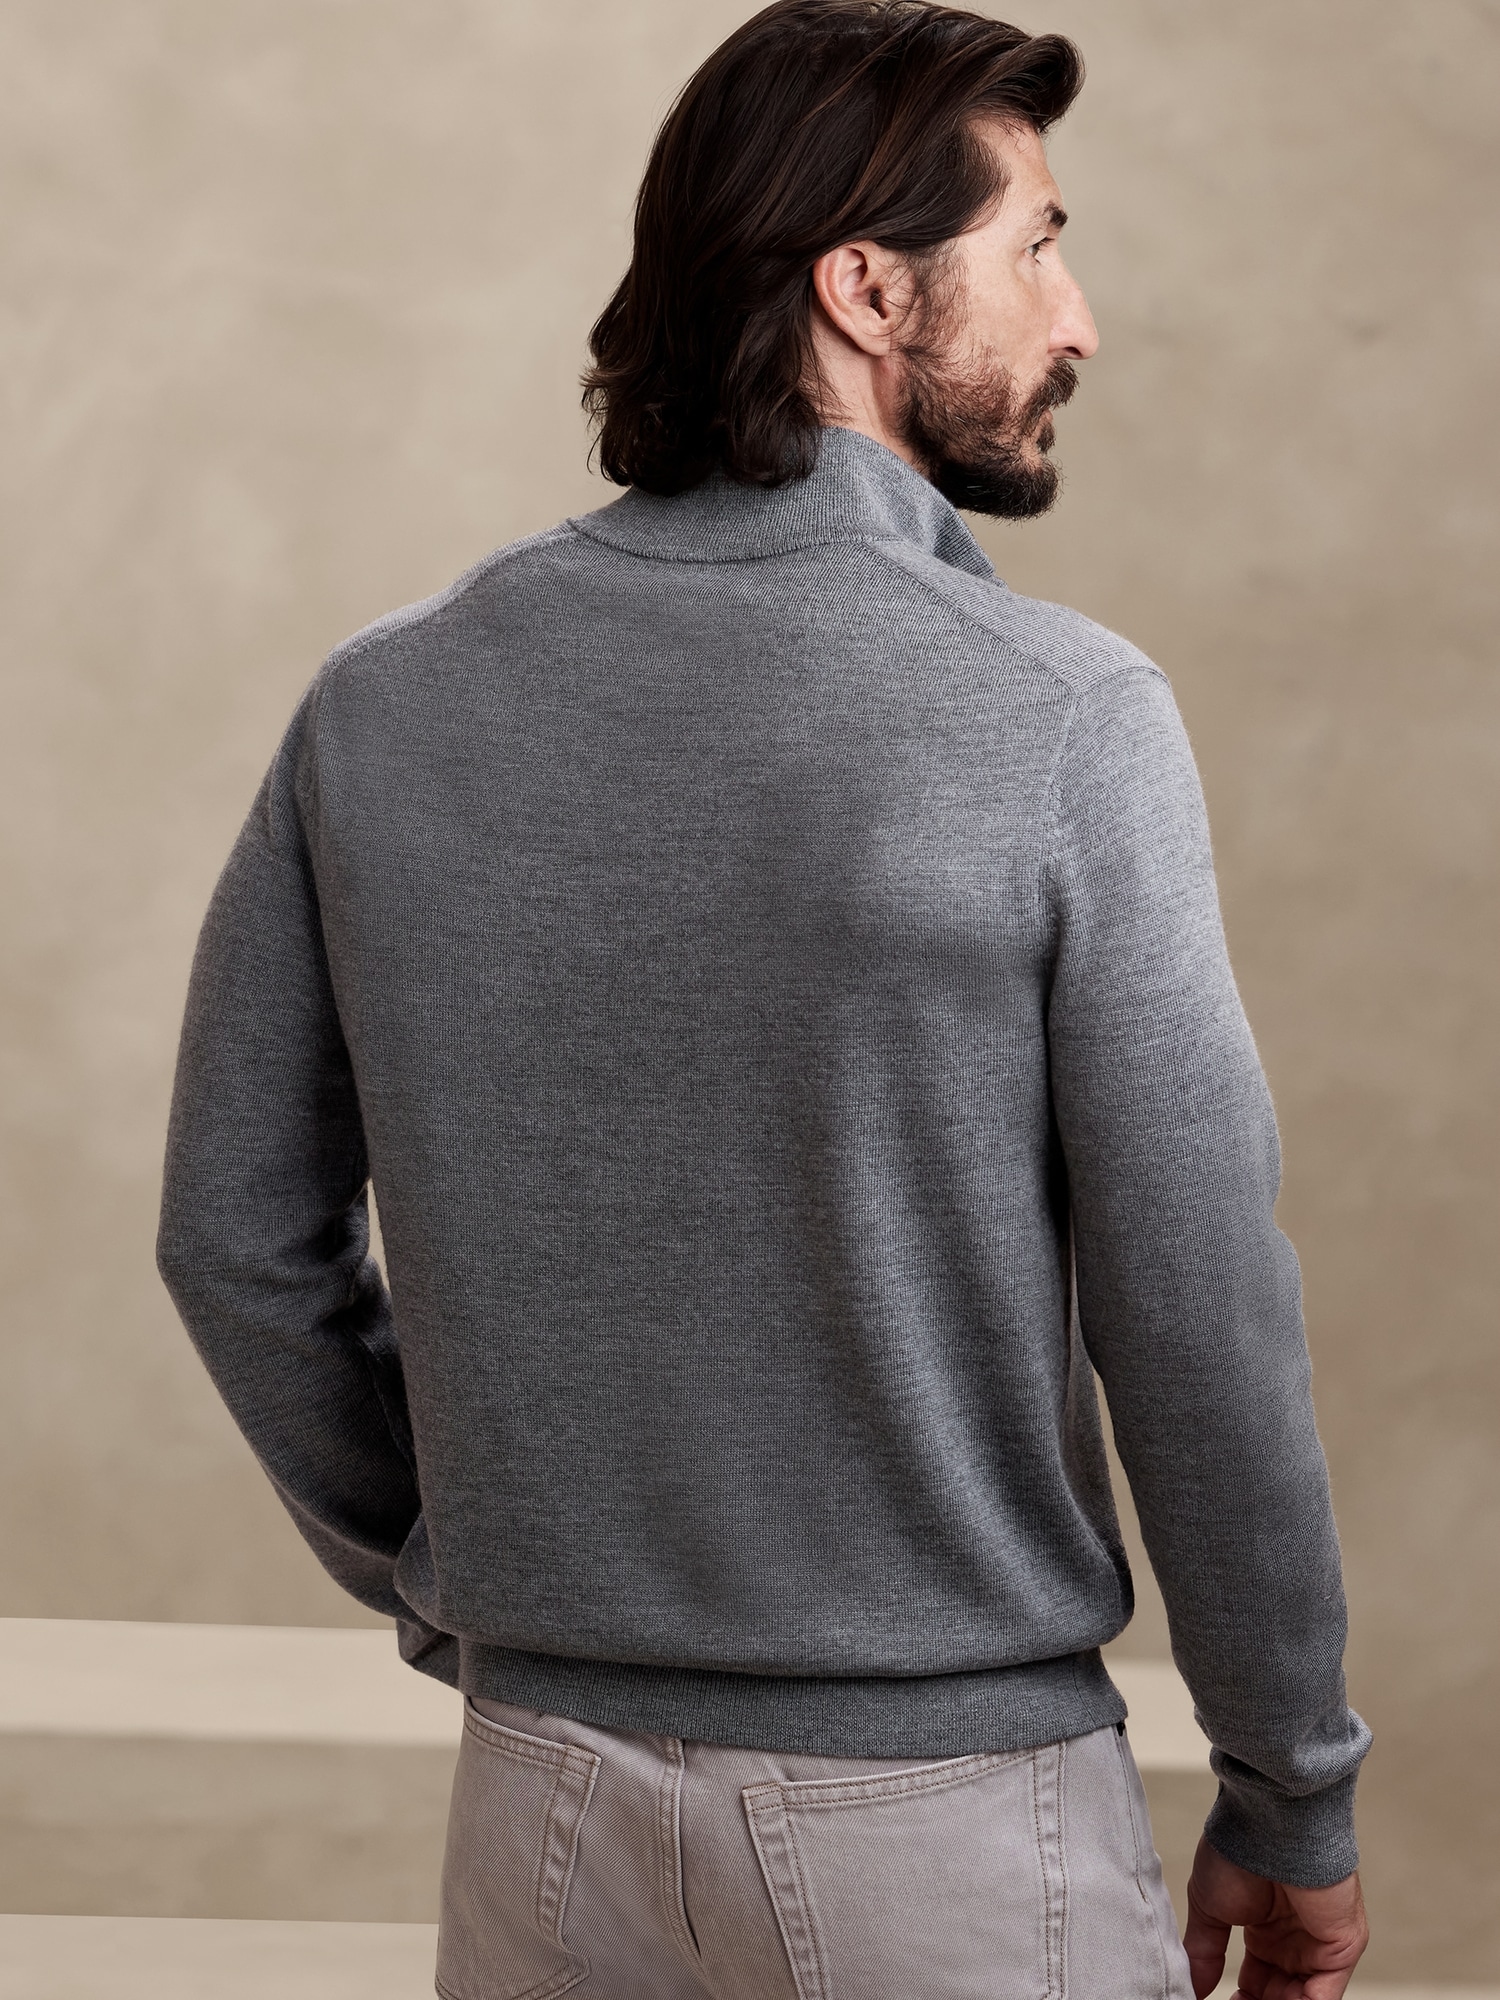 Sweater Large Linea Uomo Made in Italy Burgundy Merino Wool Long